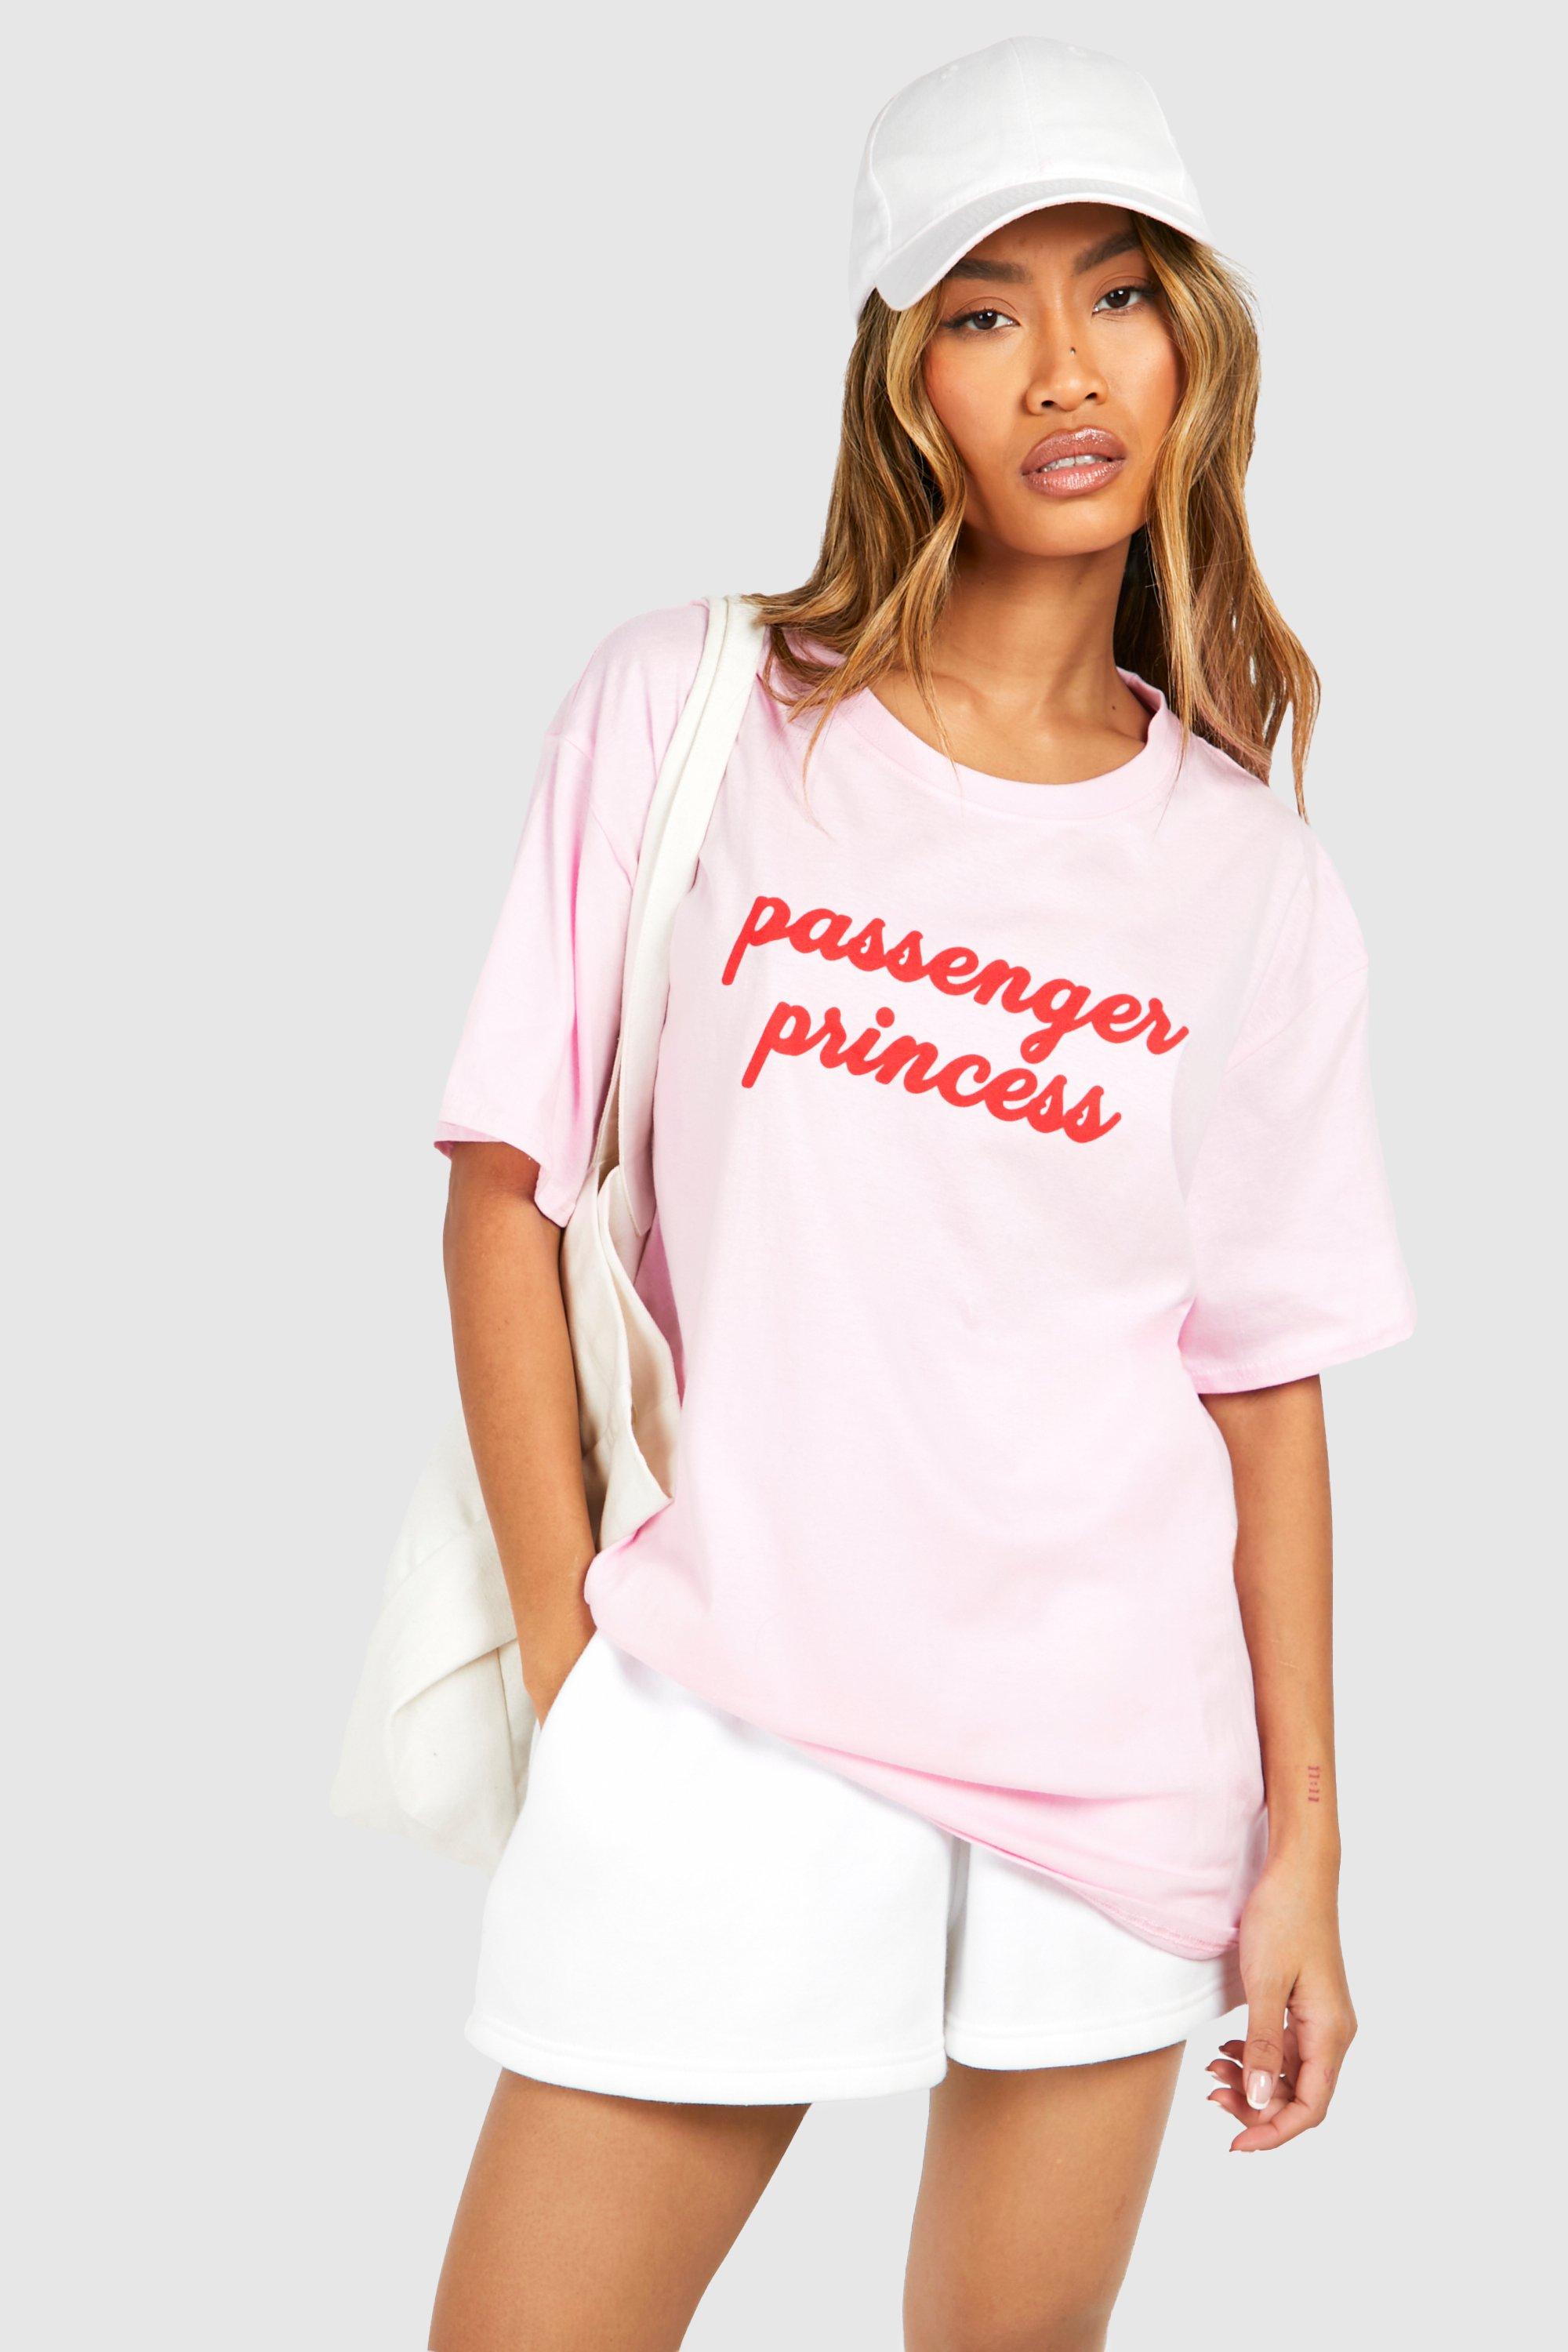 Image of Oversized Passenger Princess Pocket Print Cotton Tee, Pink